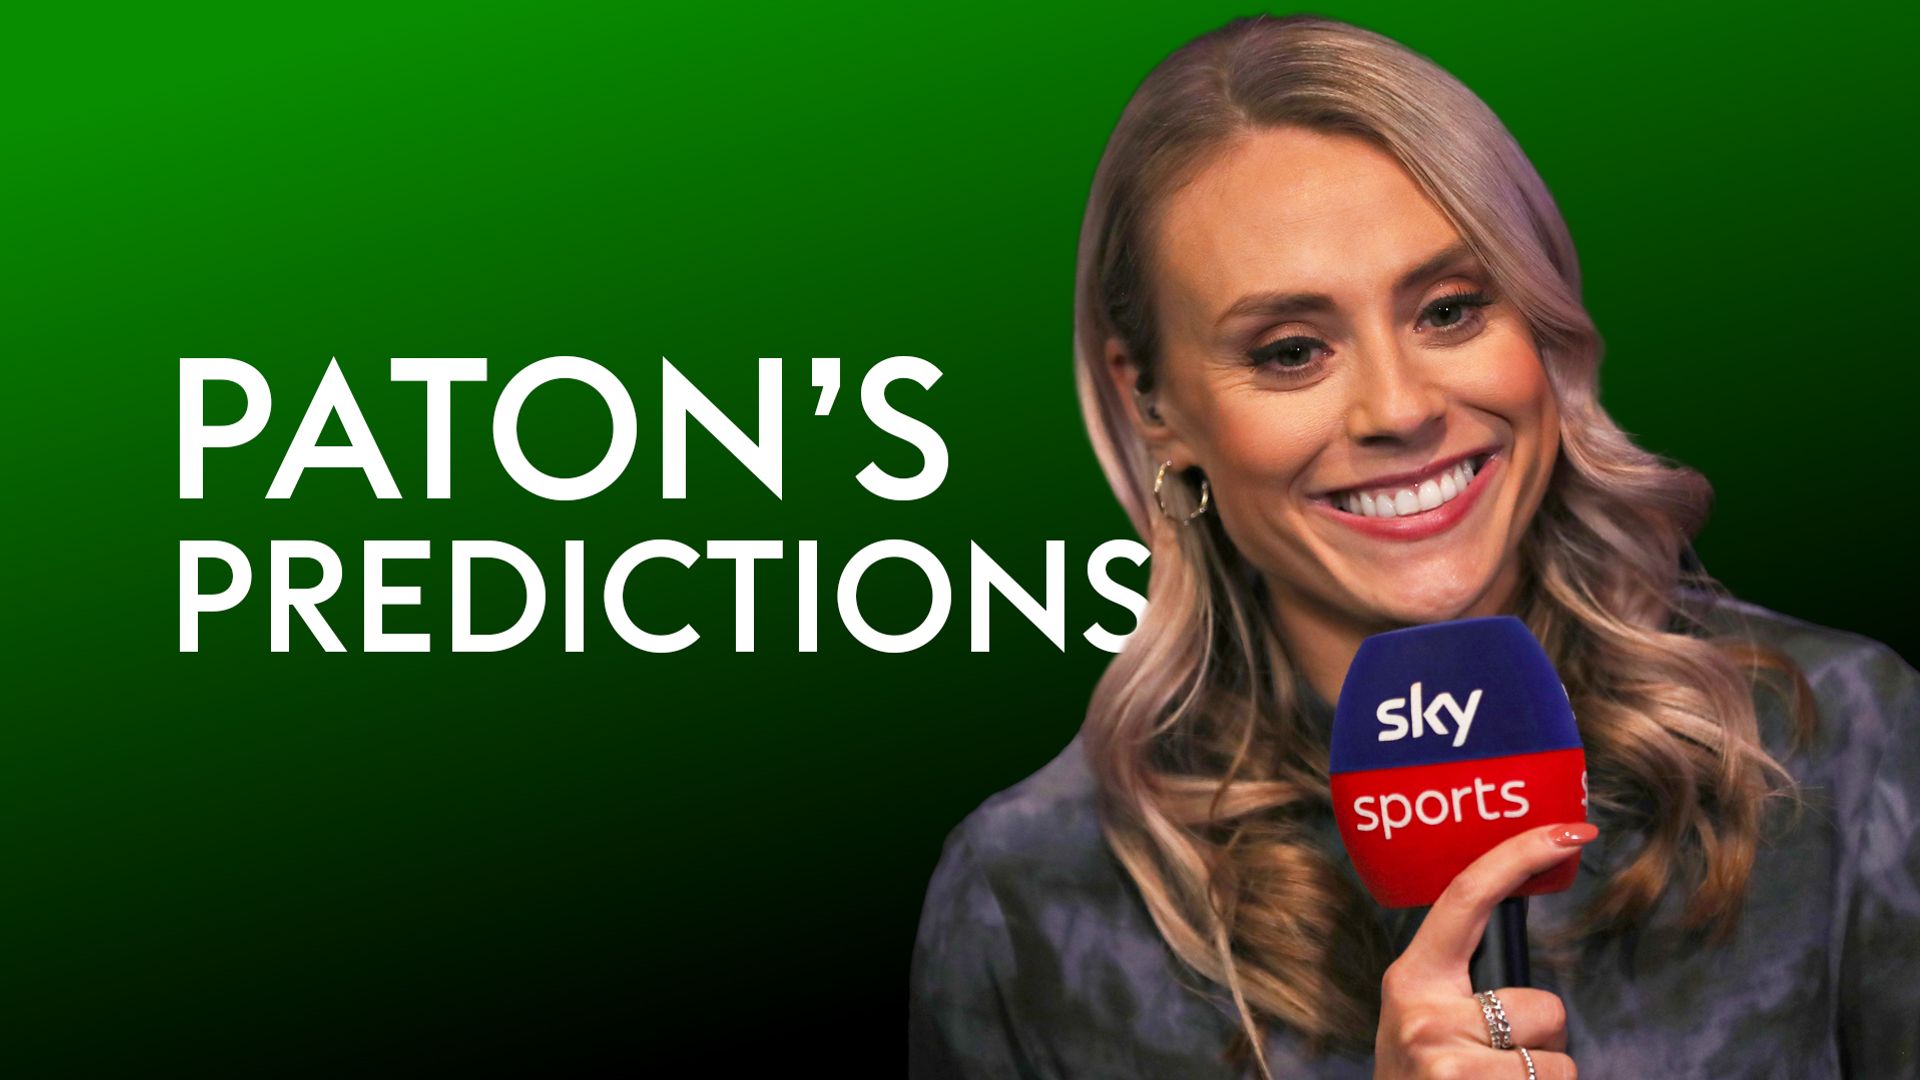 Paton's darts predictions for 2022